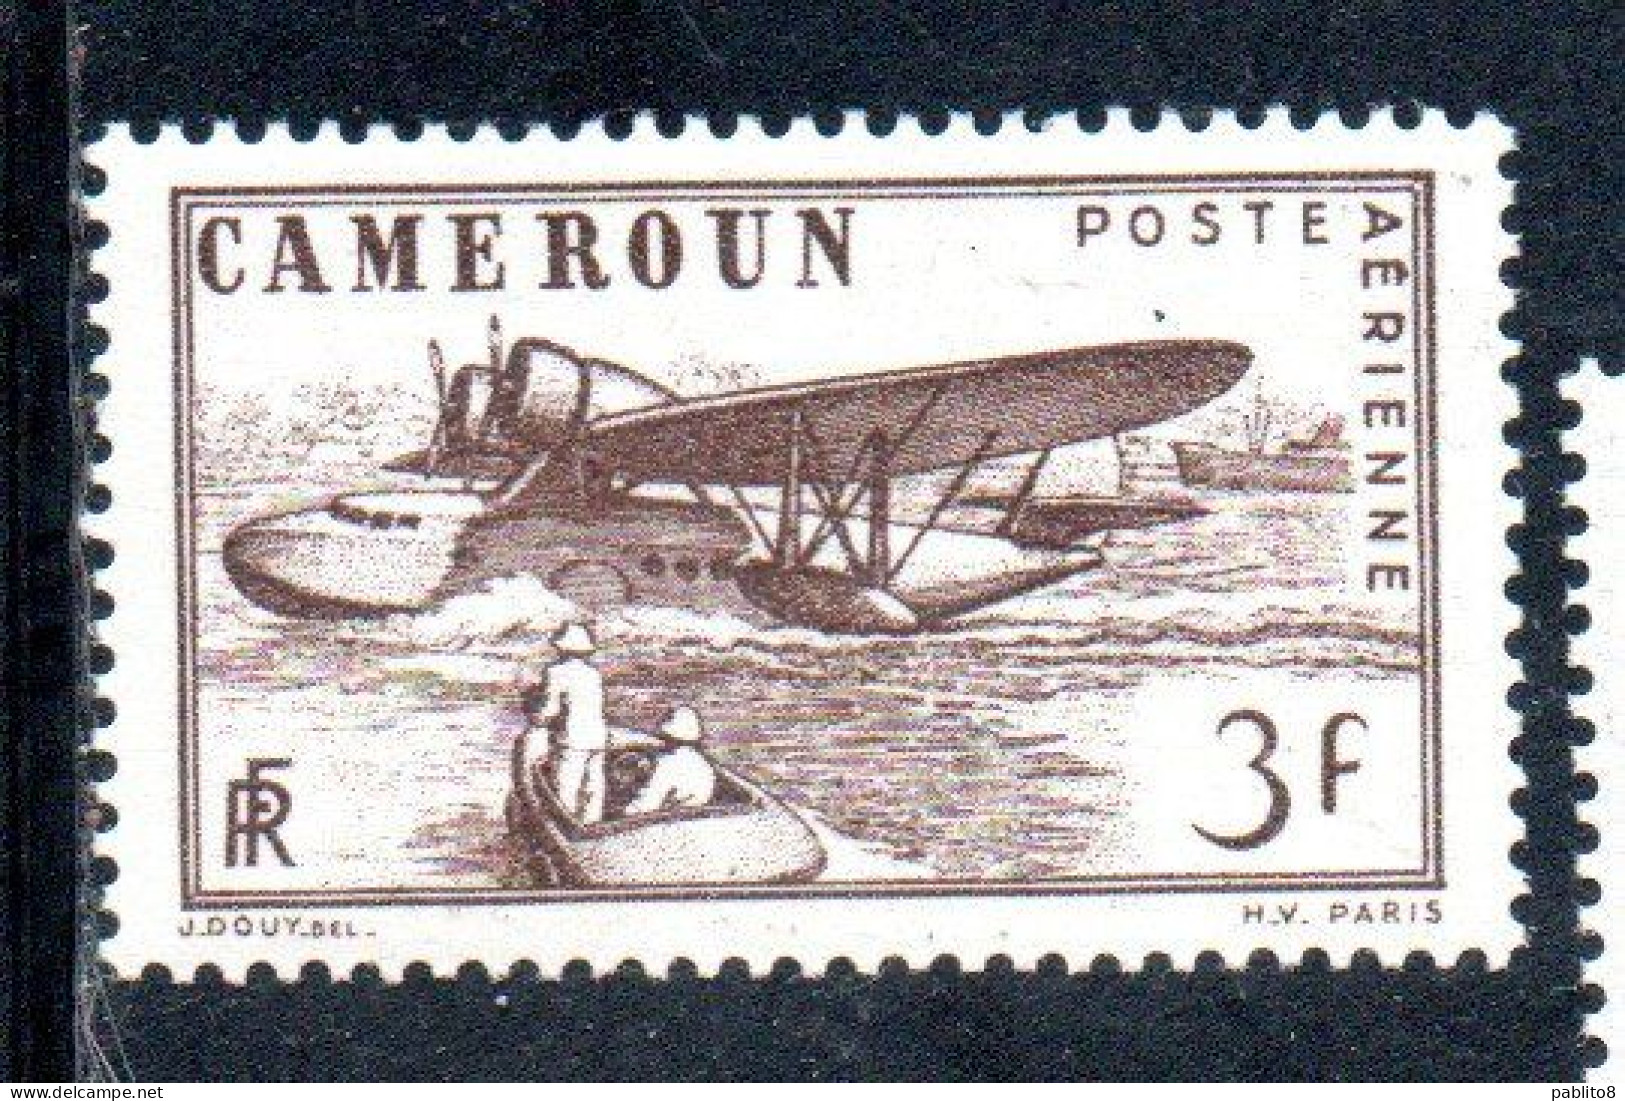 CAMEROUN CAMERUN 1943 1944 AIR POST MAIL AIRMAIL POSTA AEREA POST AERIENNE SEAPLANE ALIGHTING 3fr MNH - Luftpost